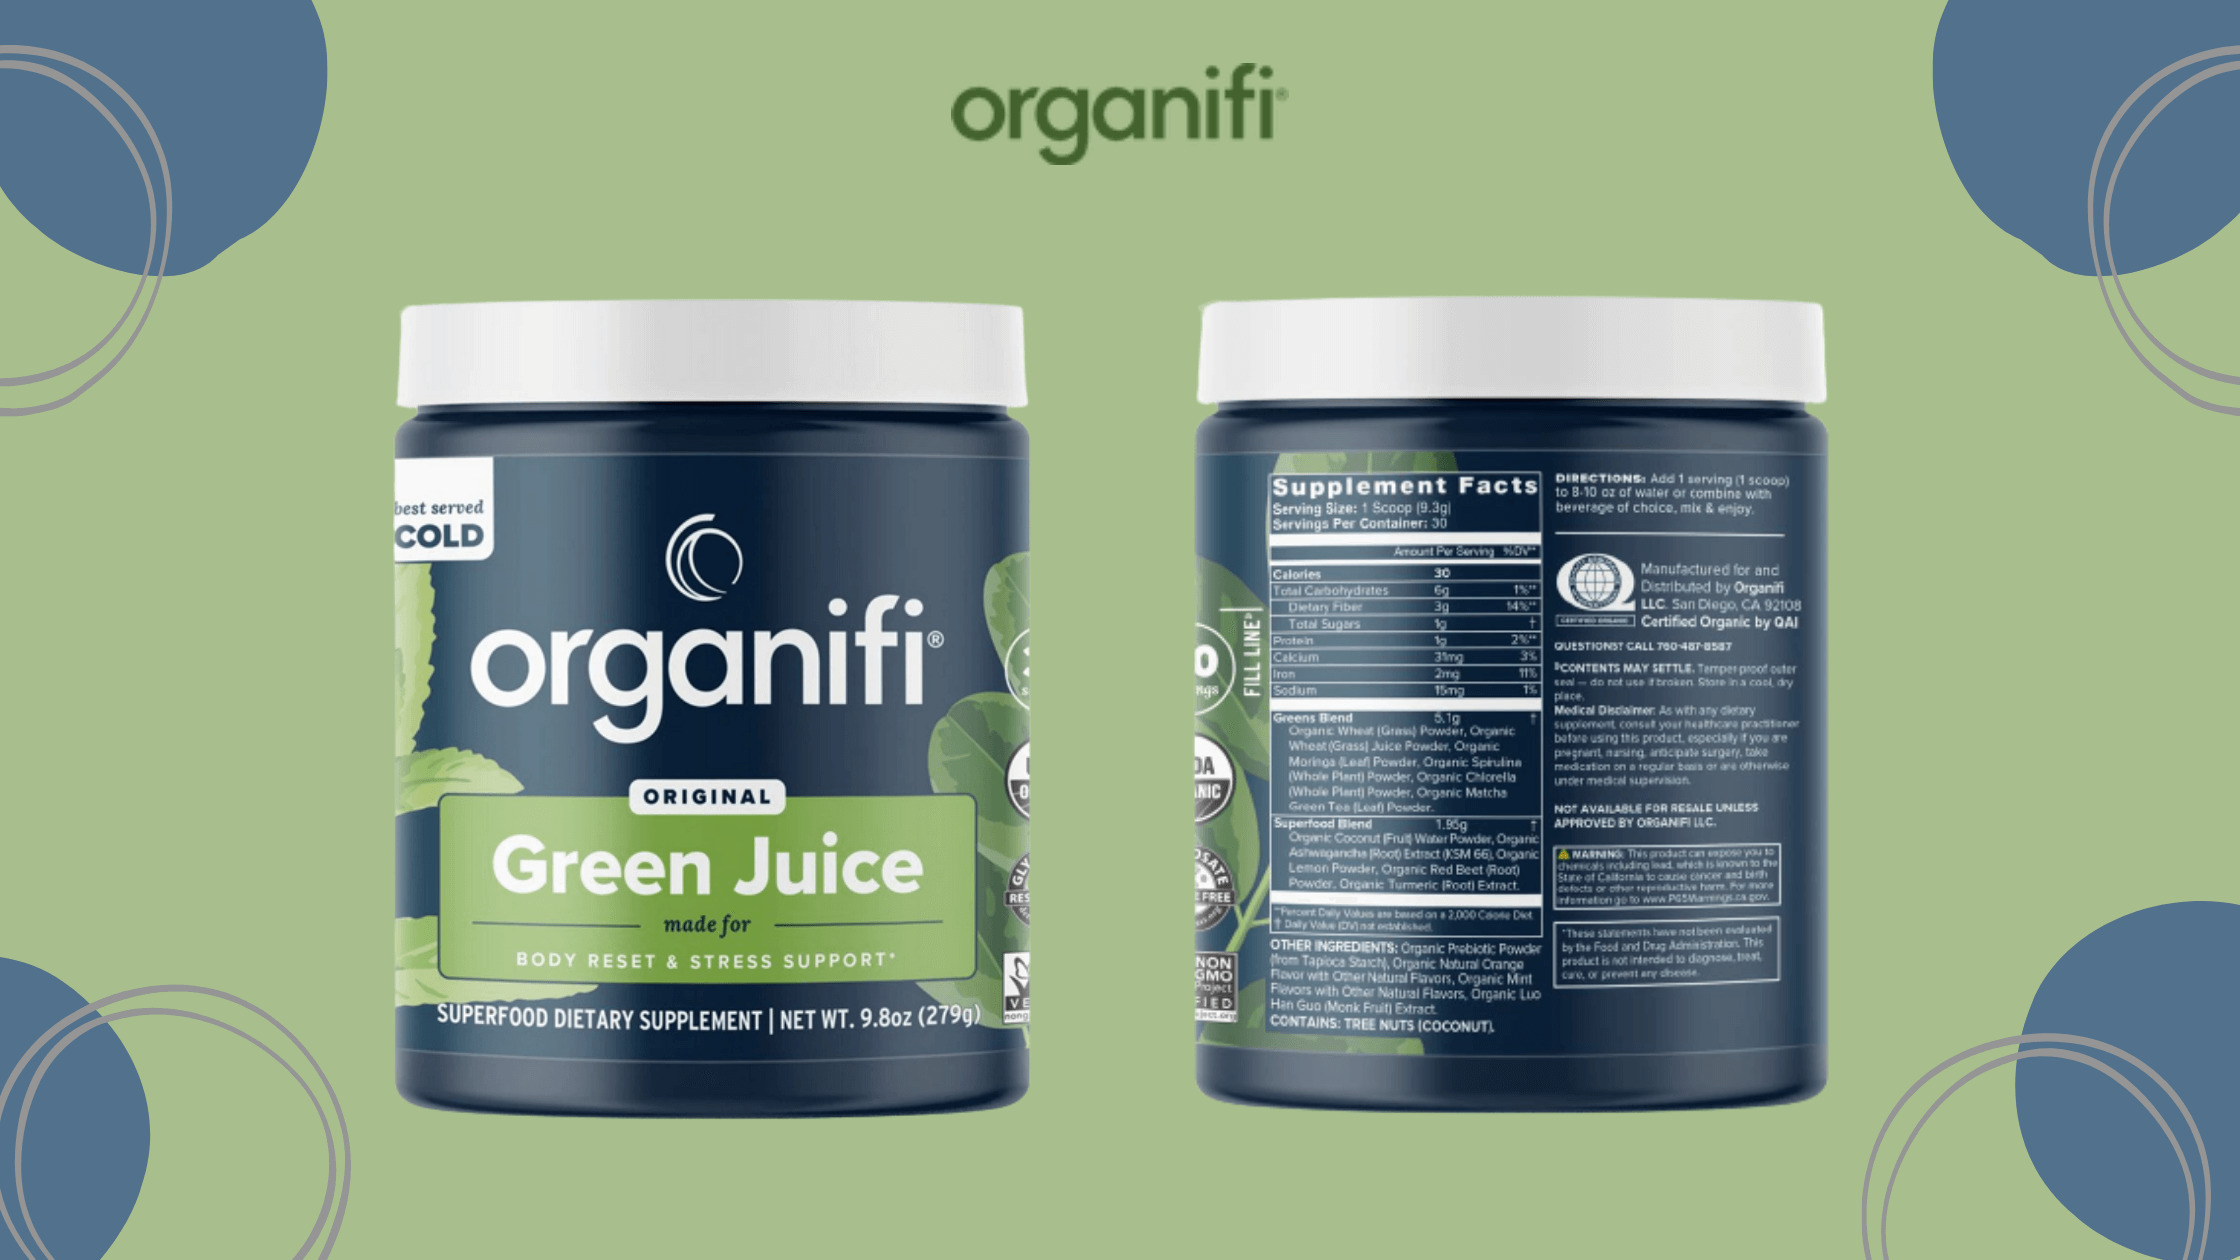 Organifi Green Juice Supplement Facts